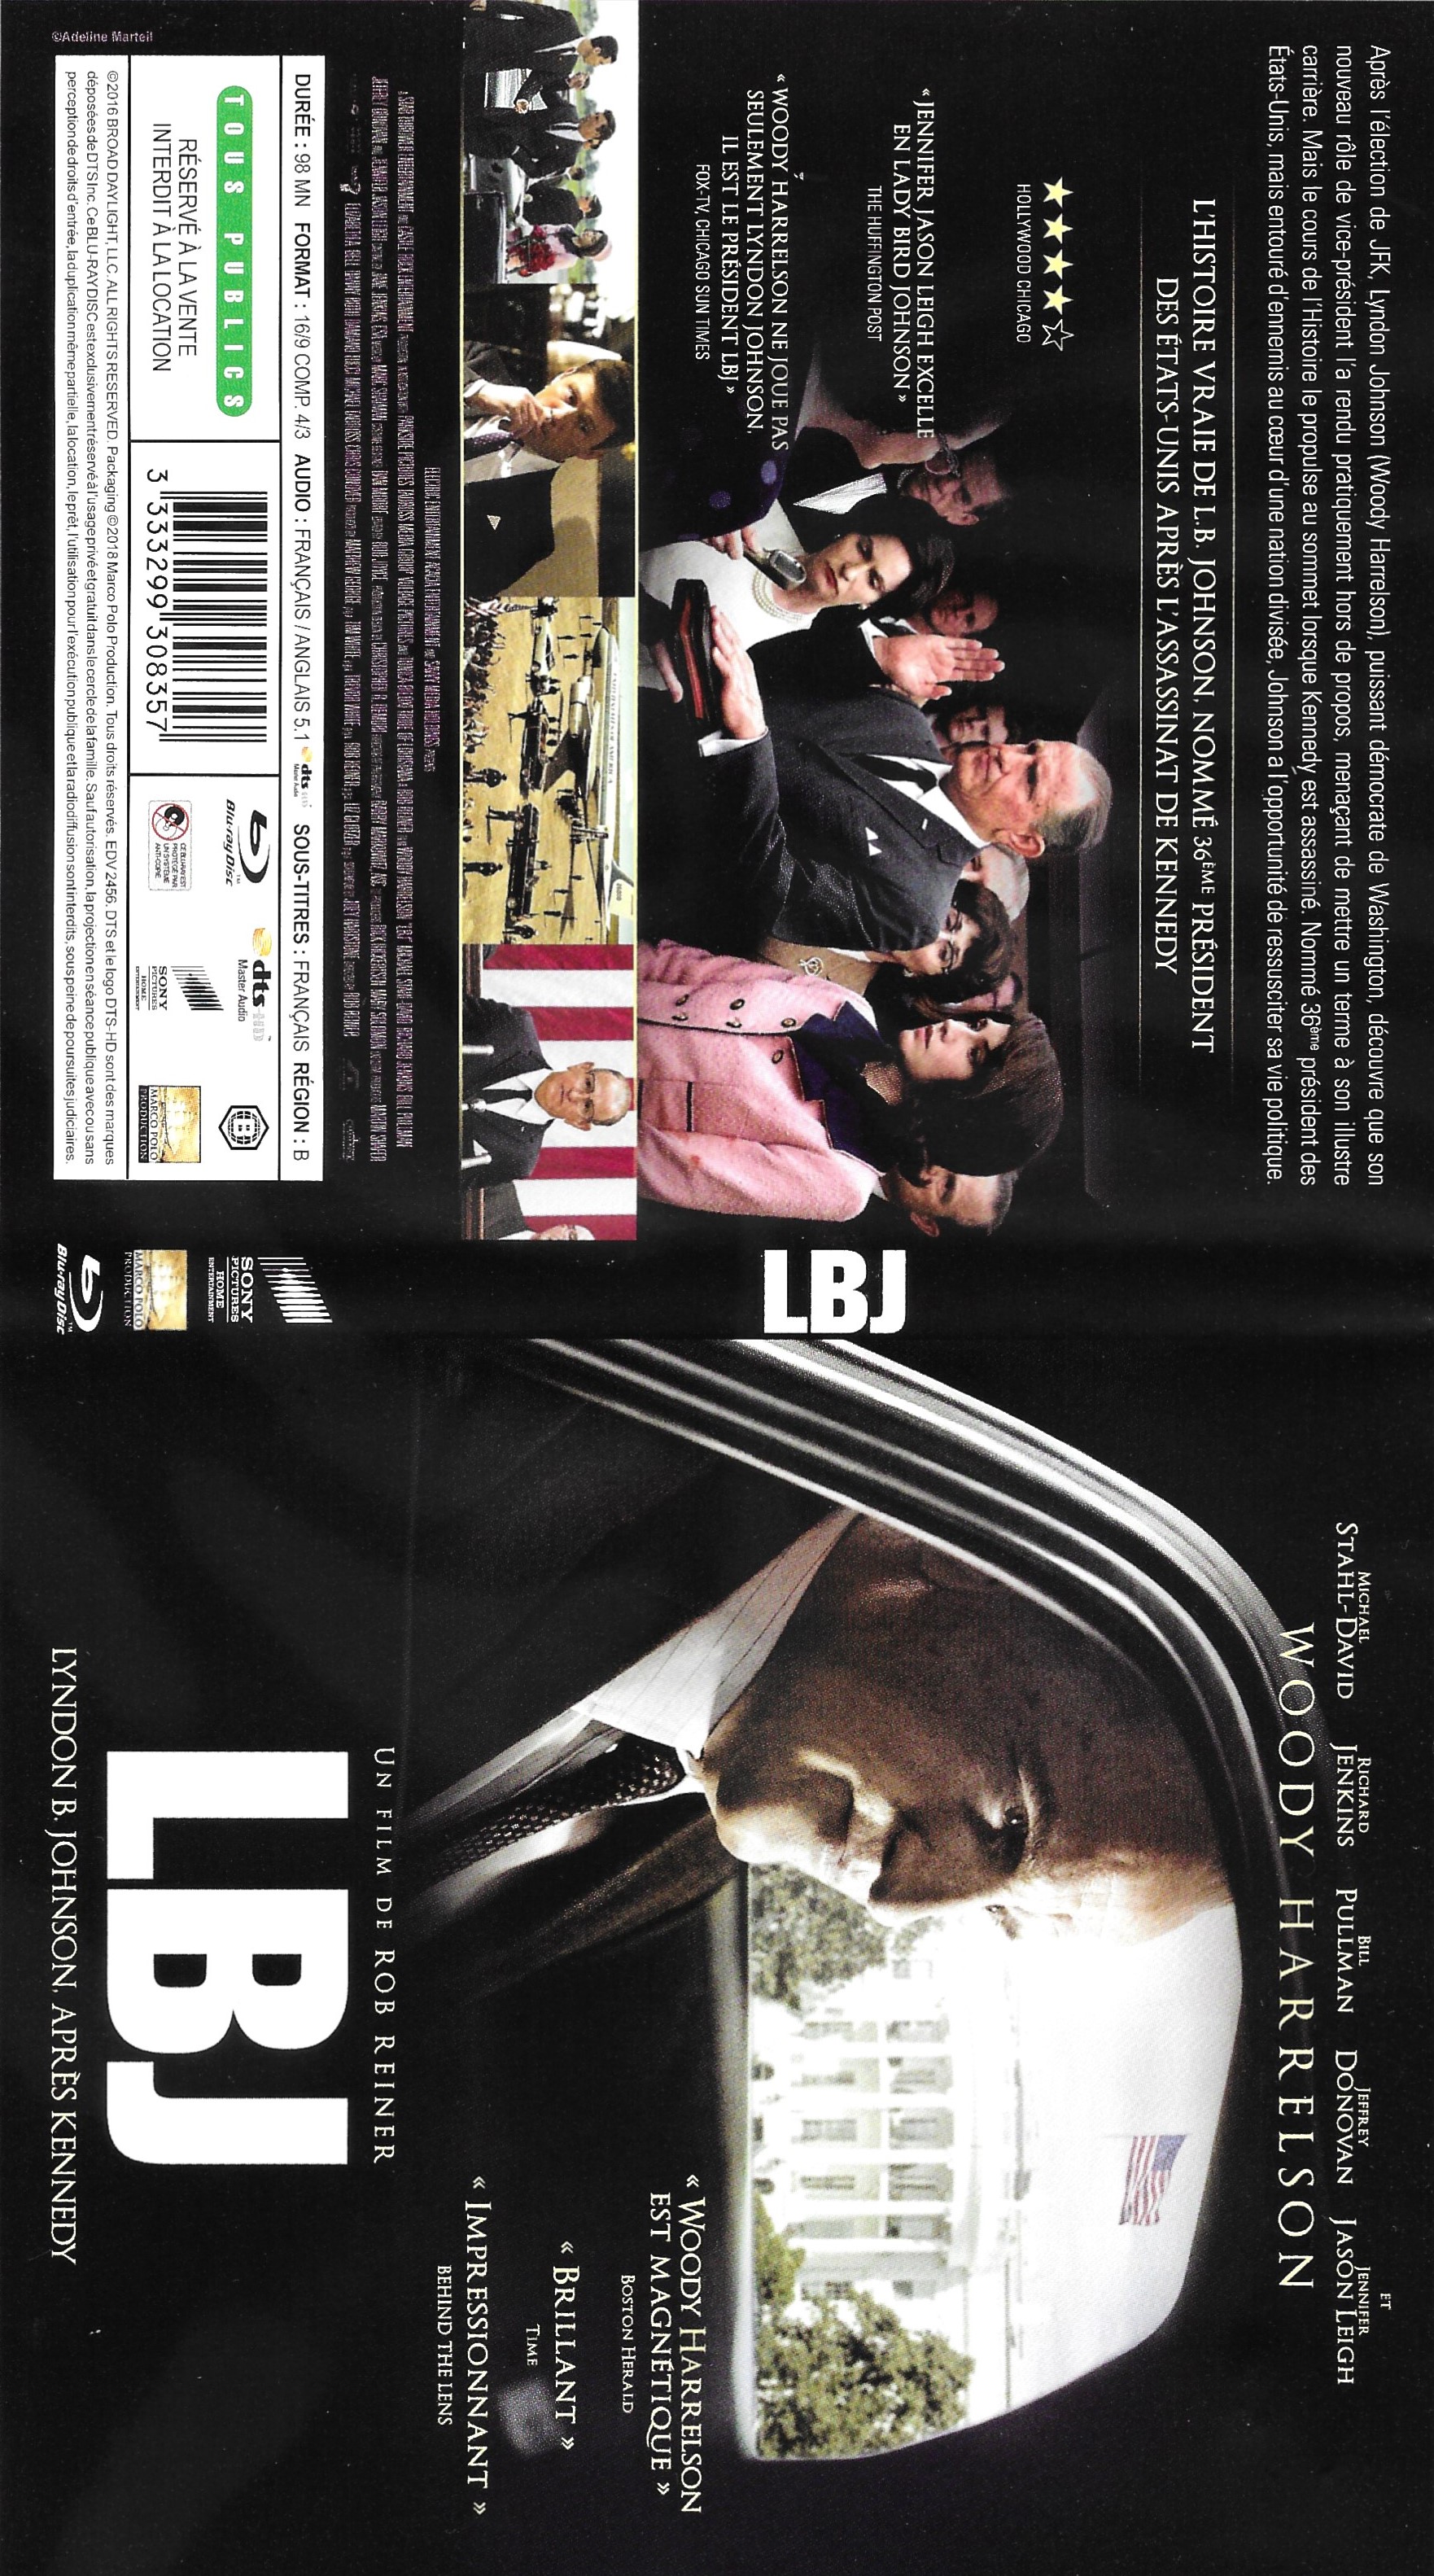 Jaquette DVD LBJ (BLU-RAY)